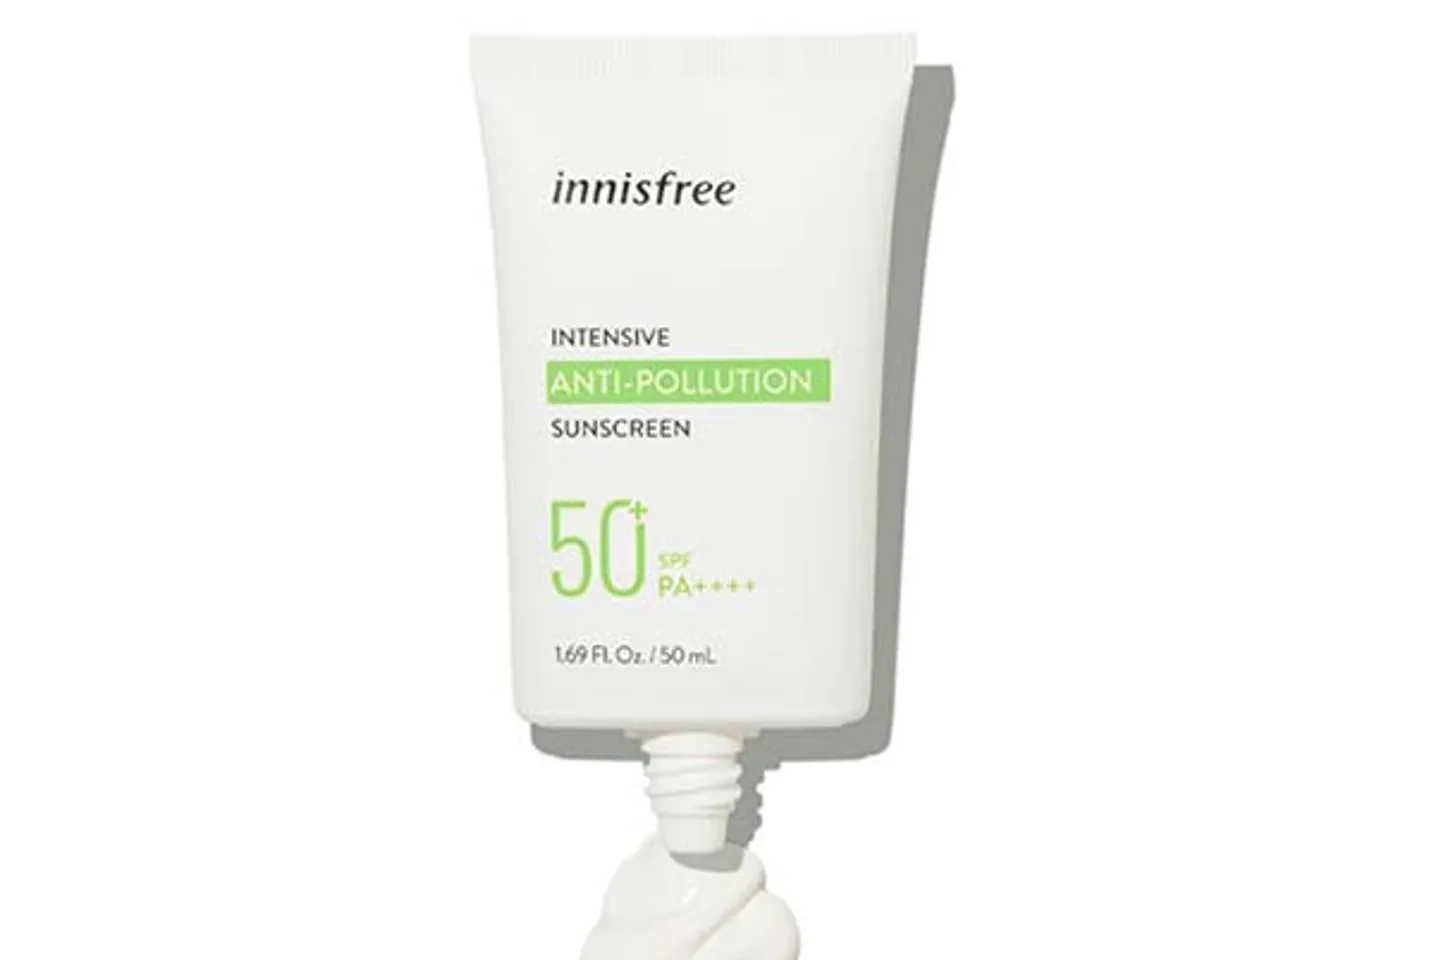 kem kháng nắng nóng Innisfree Anti-Pollution Sunscreen của Innisfree